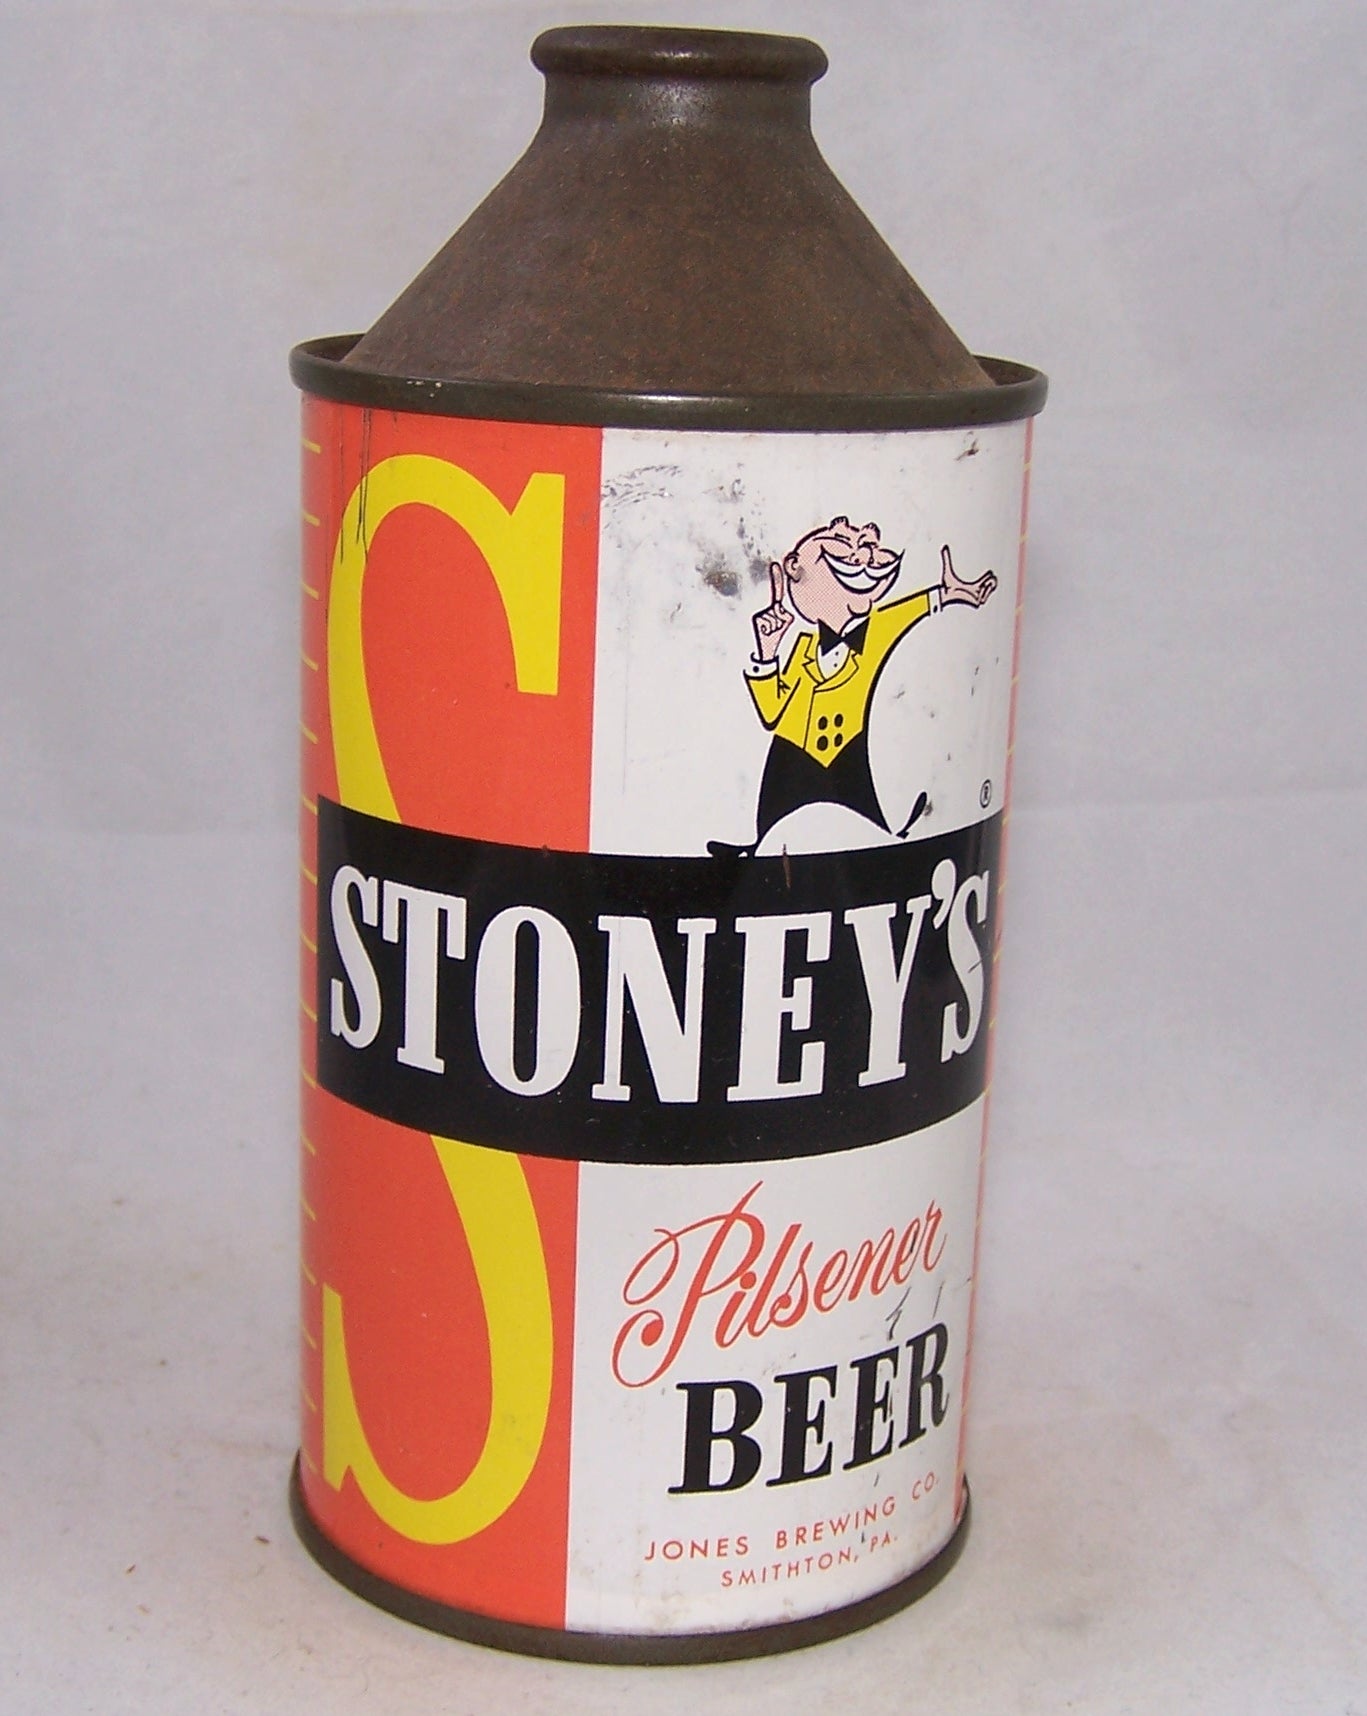 Stoney's Premium Beer, USBC 186-10, Grade 1/1- sold 7/21/18